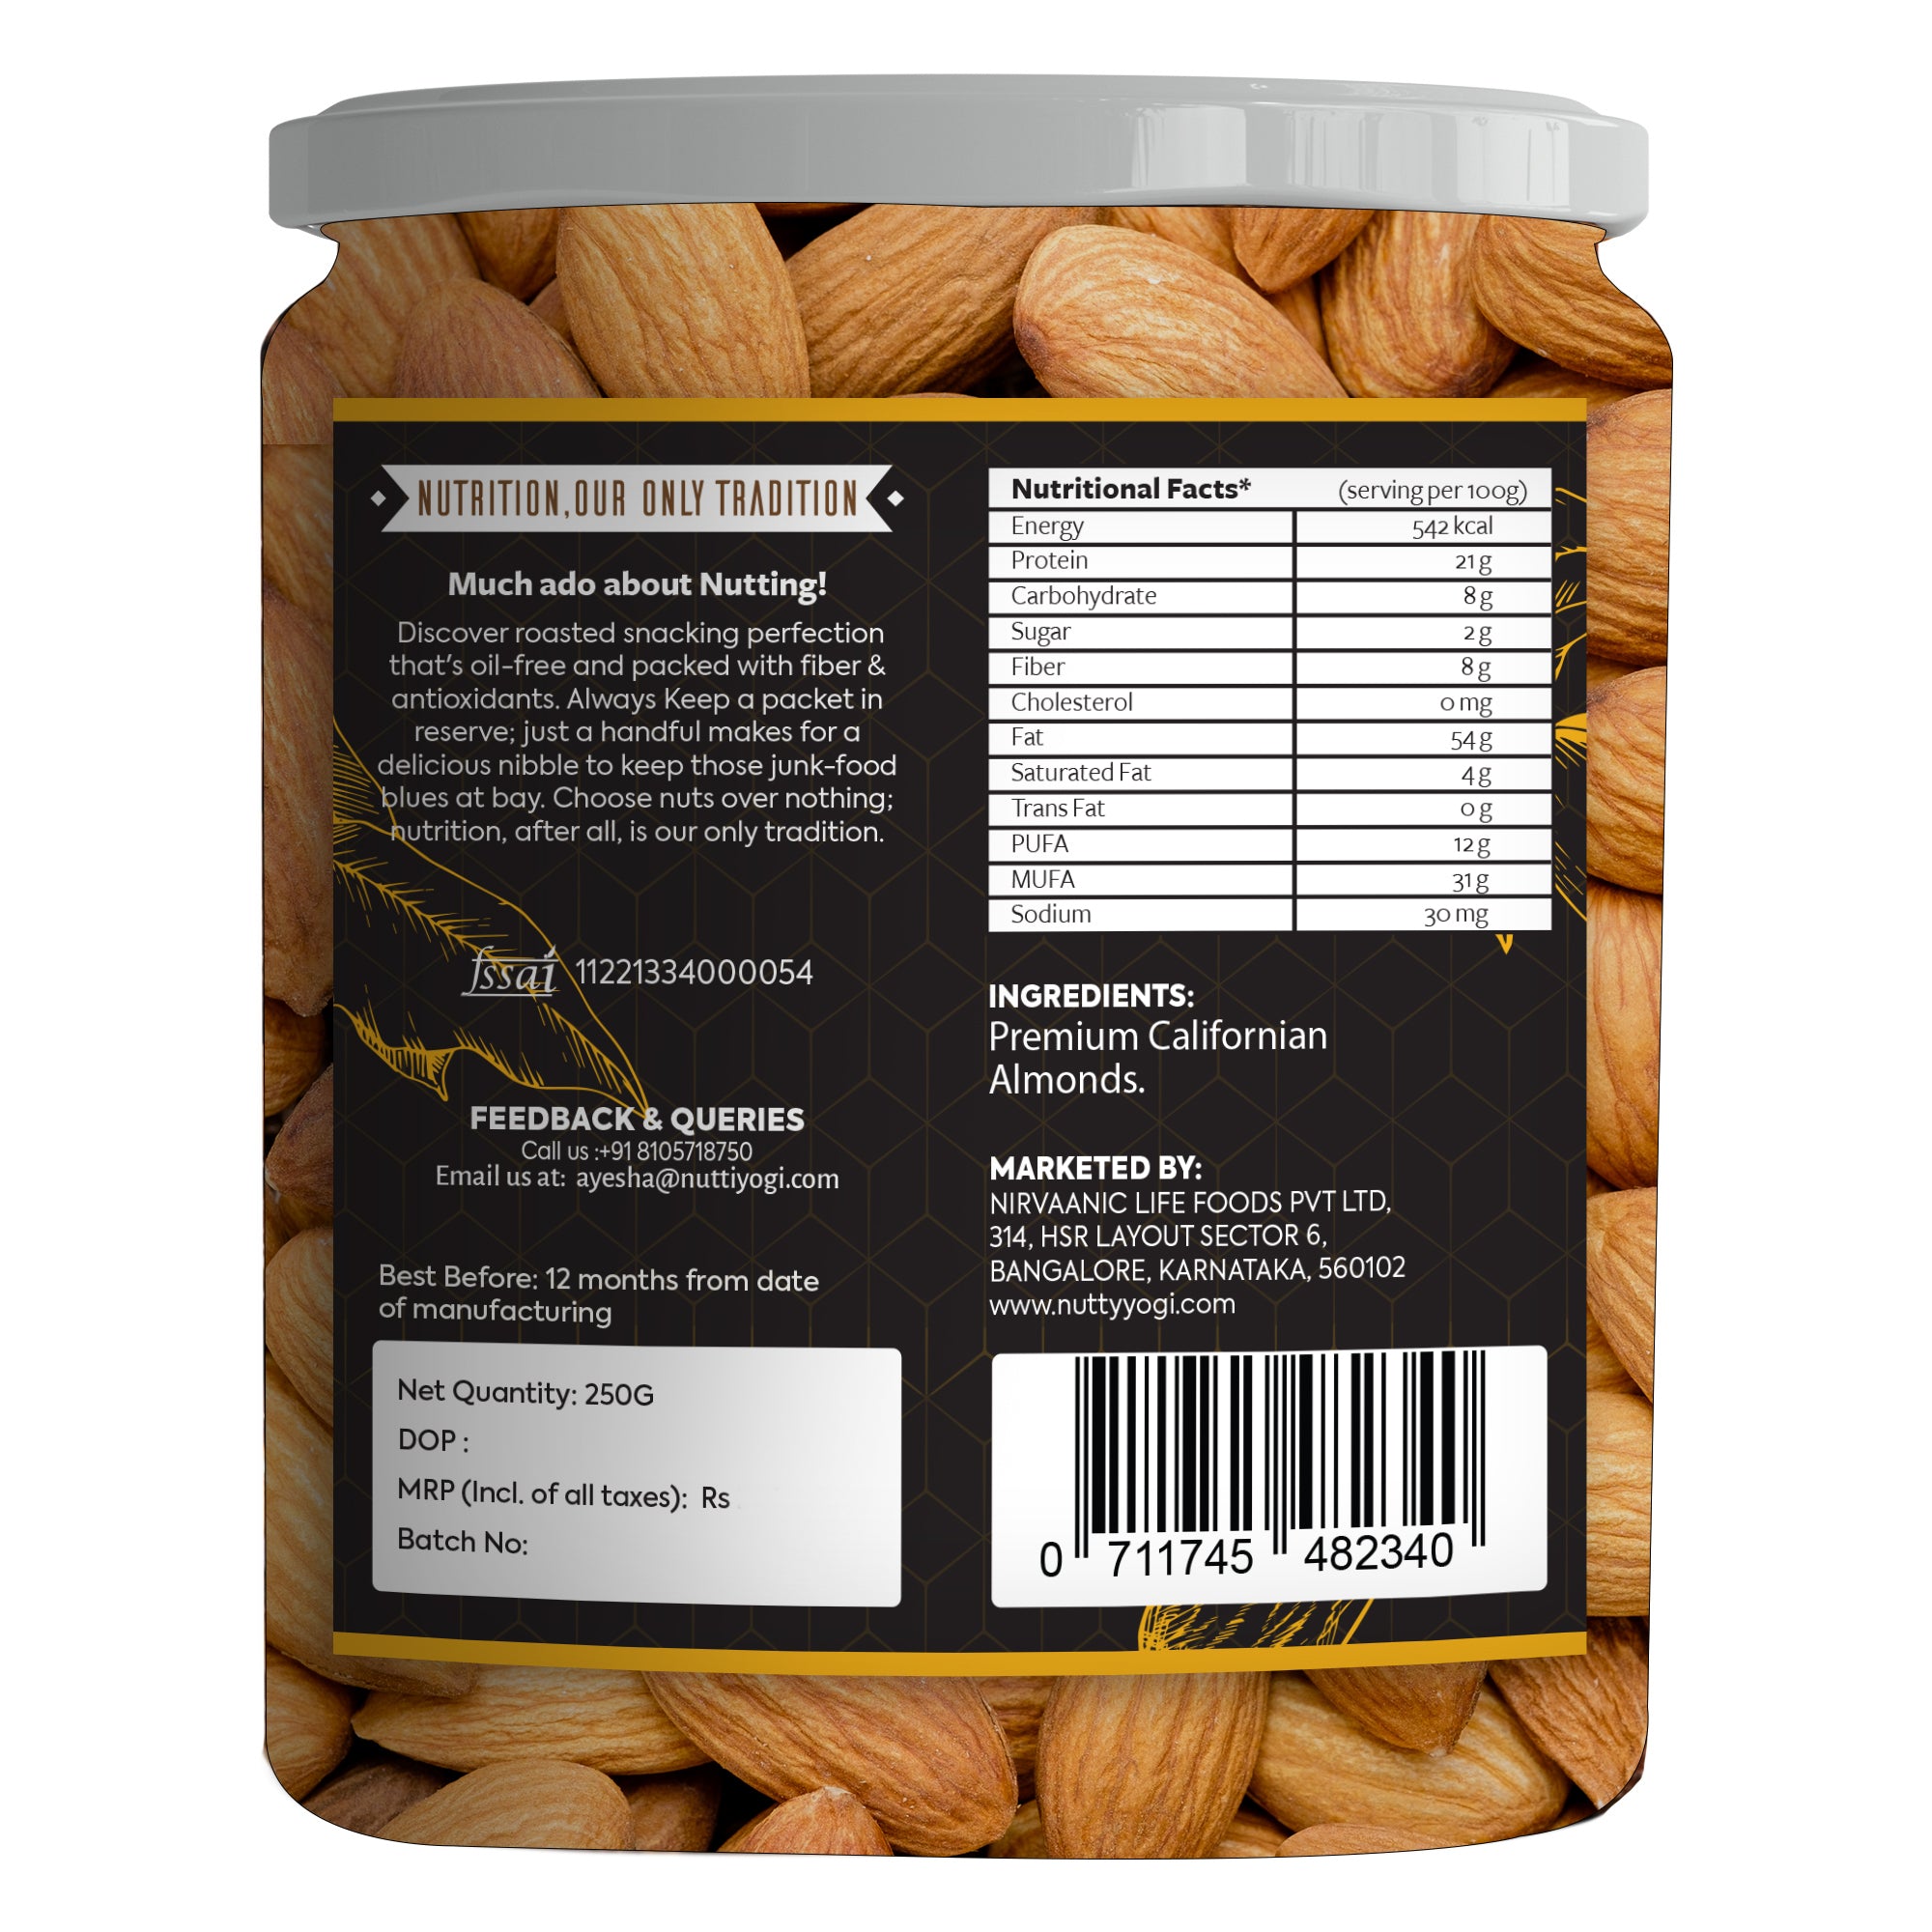 Nutty Yogi Premium Californian Almonds